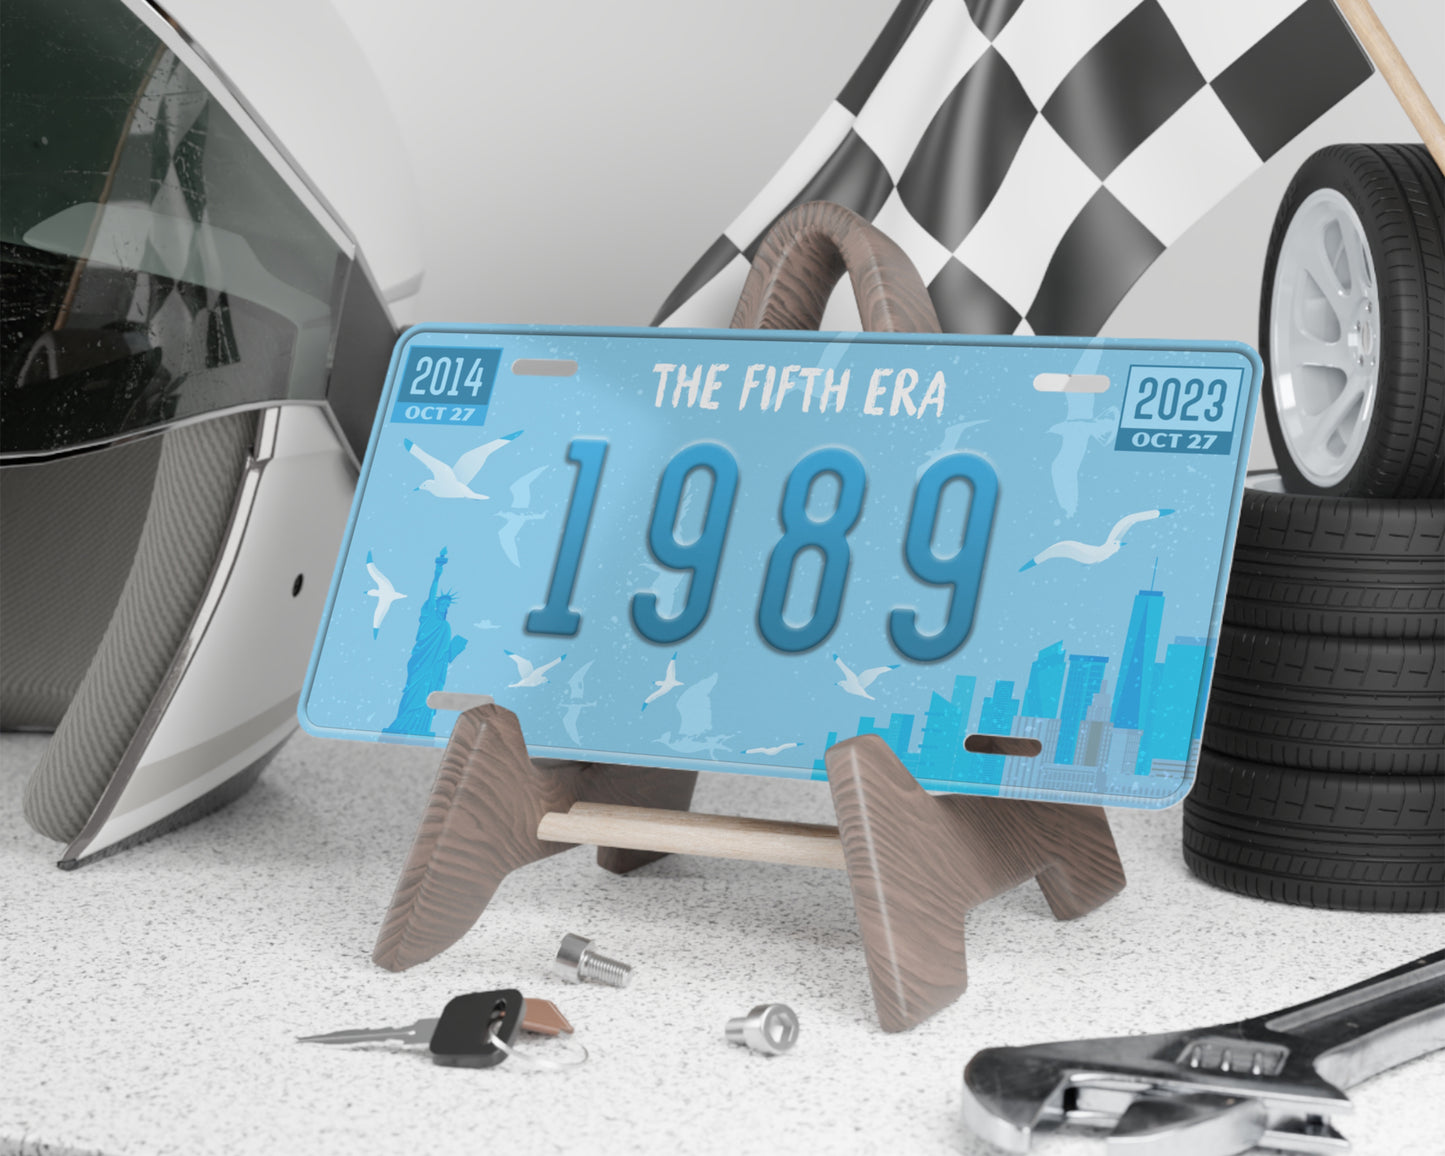 1989 era license plate